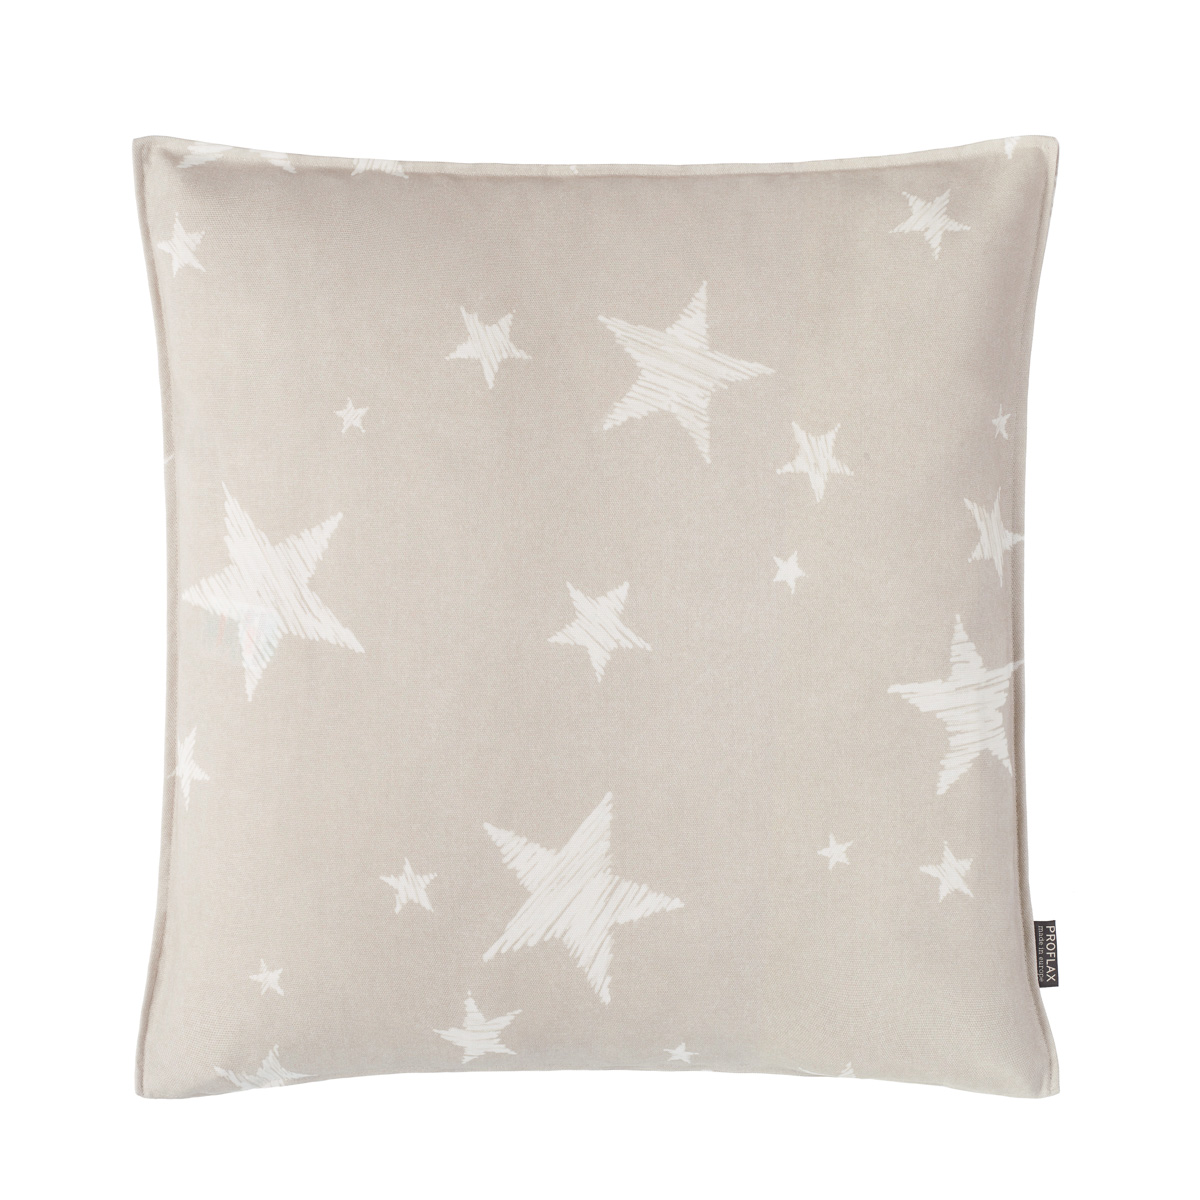 PROFLAX Kissenhülle hellgrau mit weißen Sterne 40 x 40 cm